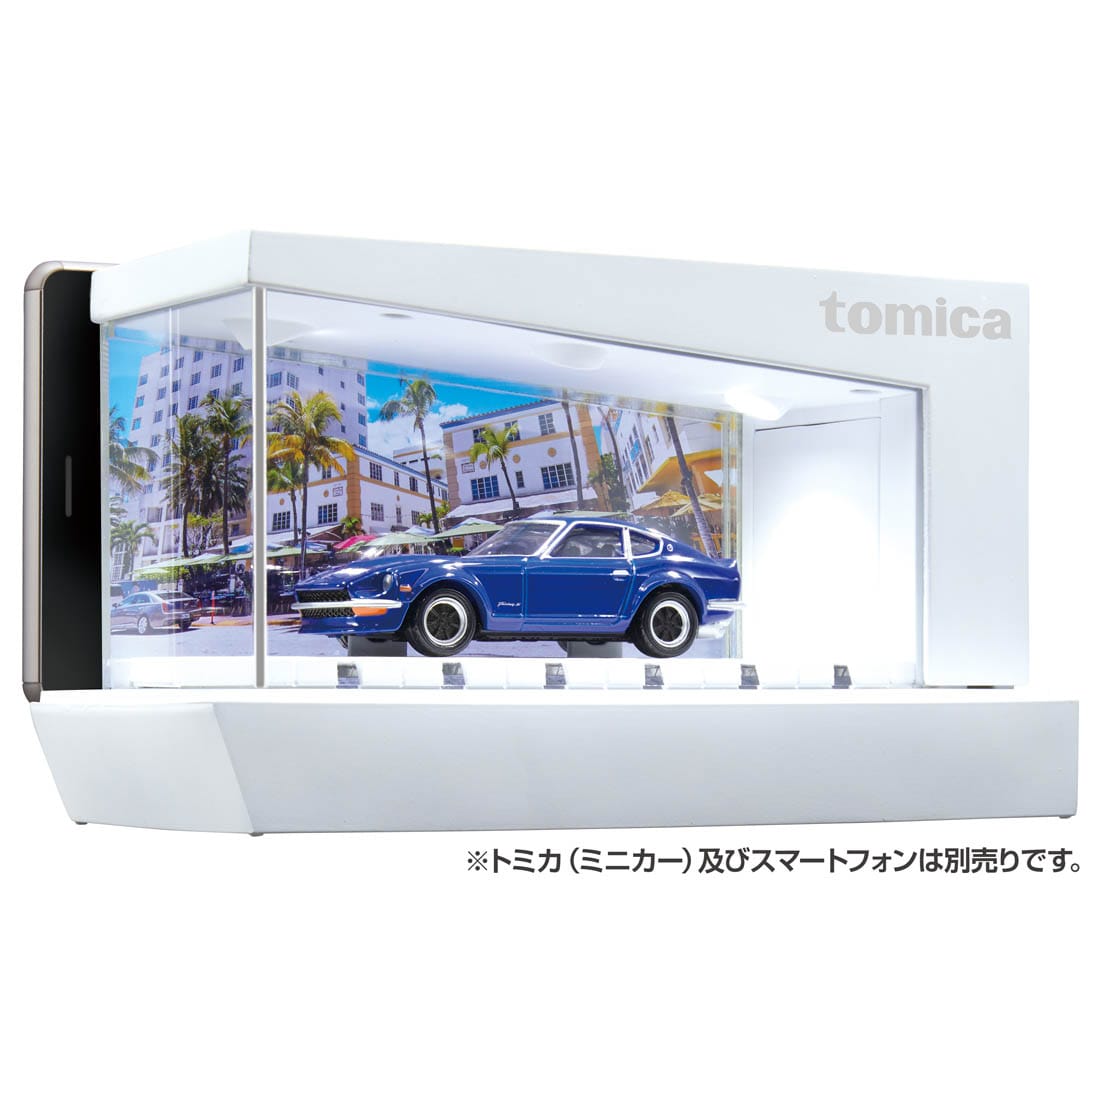 TOMICA LED展示中心(白)【內未附小車】